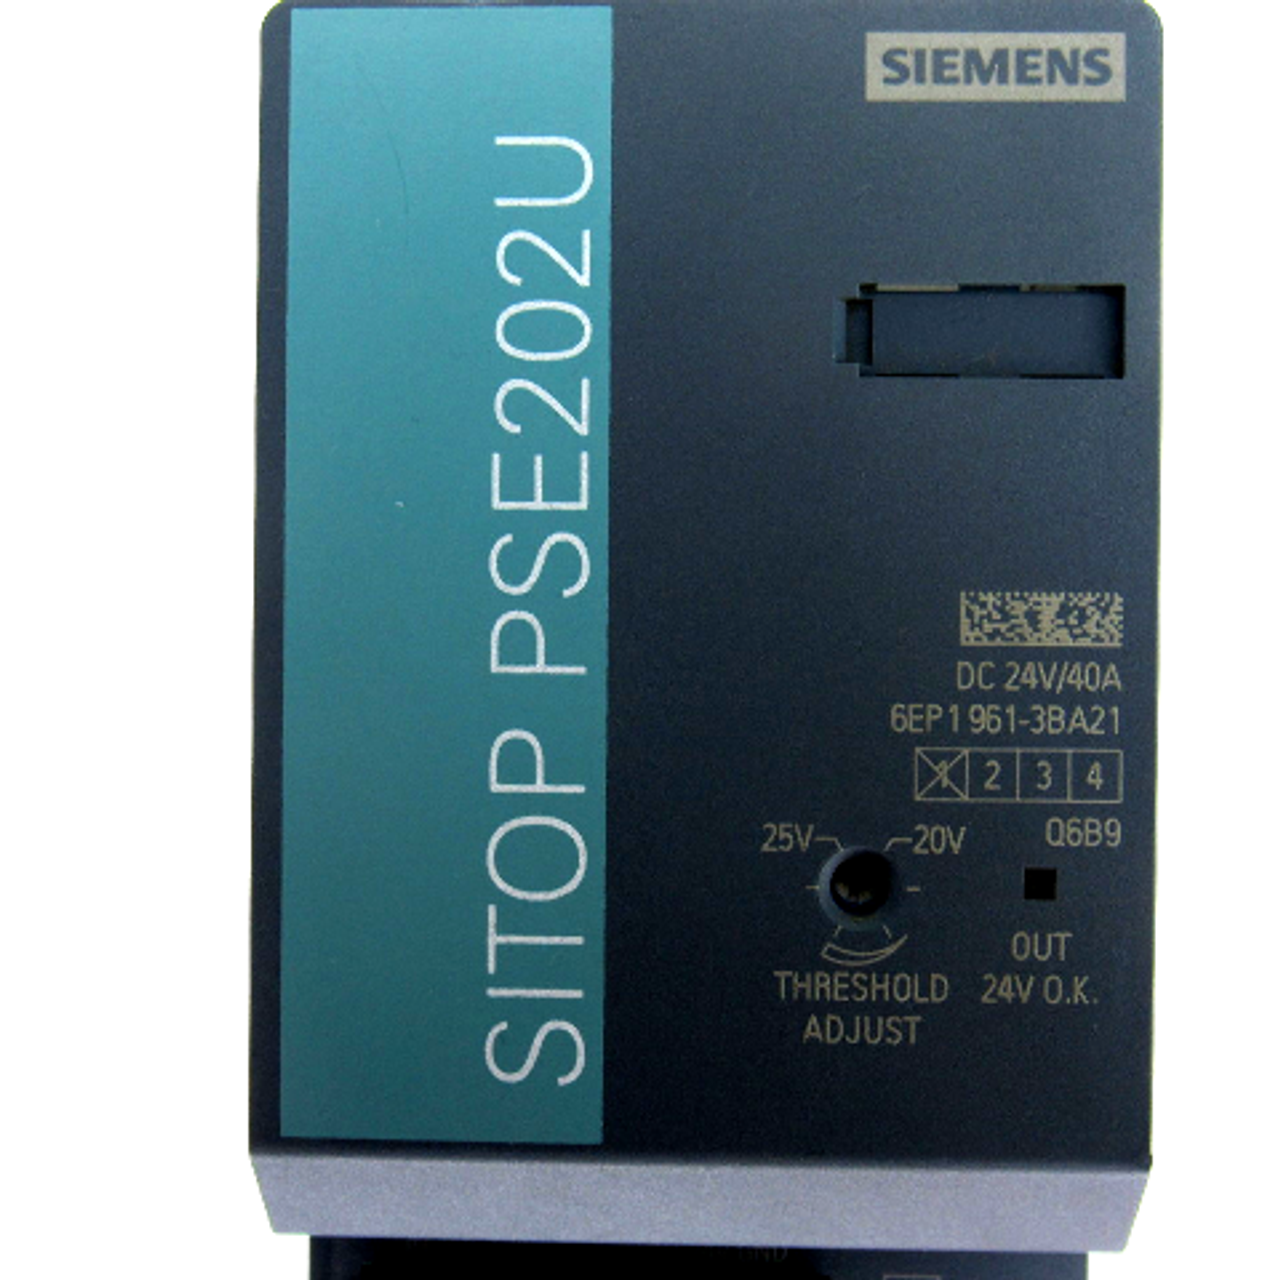 Siemens 6EP1961-3BA21 Redundancy Module SITOP PSE202U, Input/Output 40 Amp, 24V DC